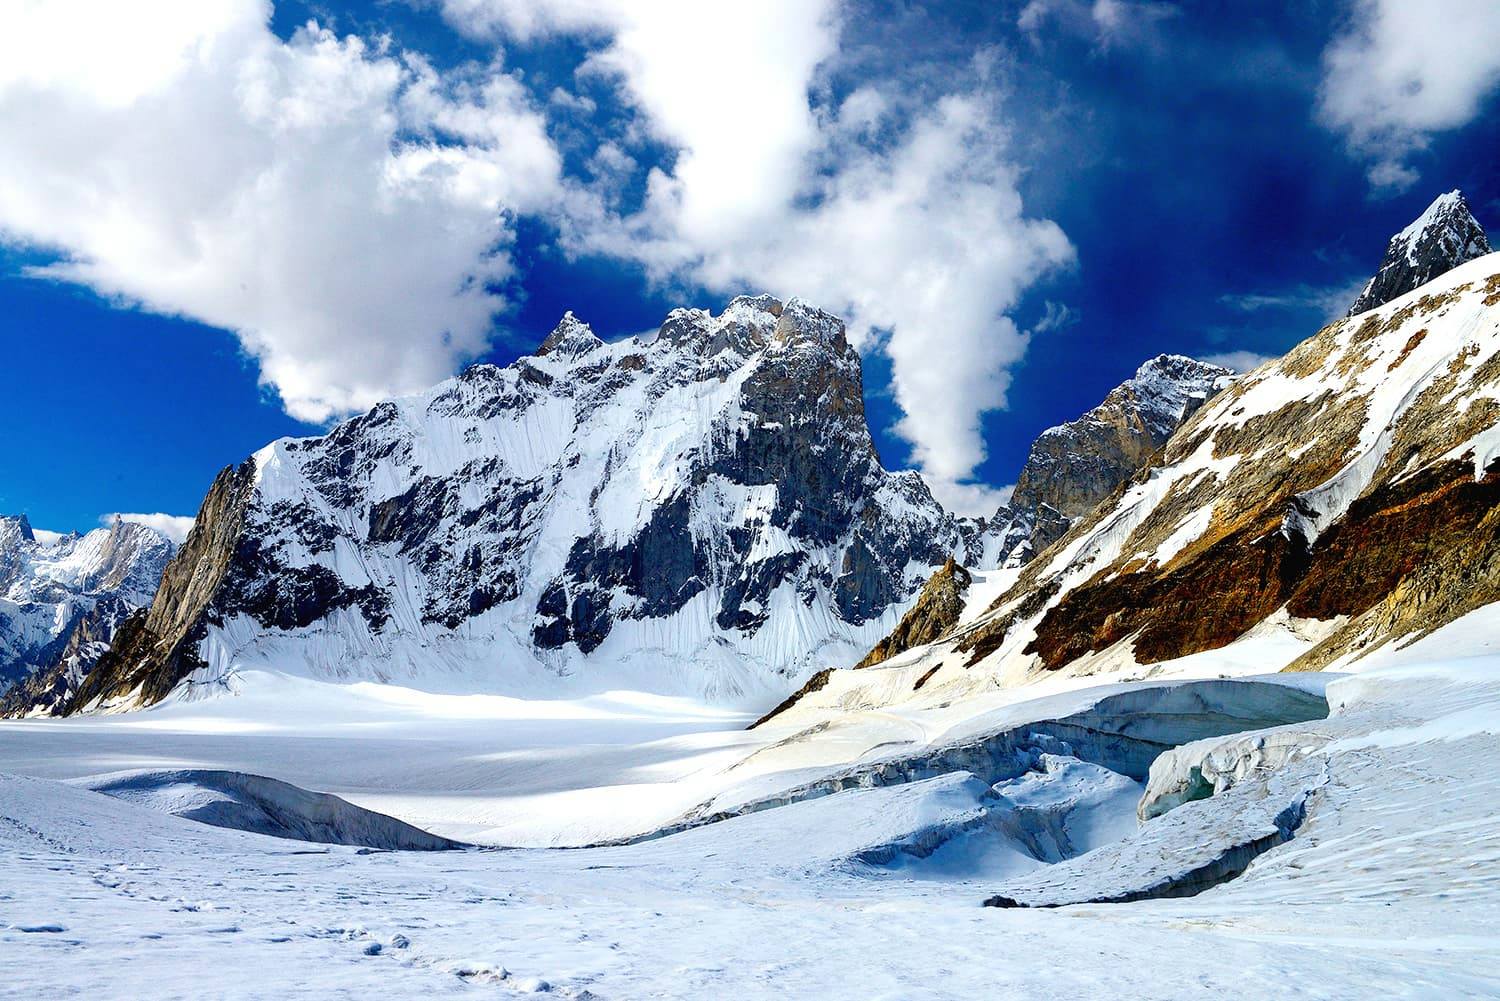 Karkorum range Hispar valley. Hispar valley. Hispar La/pass 5150 m Hispar glacier Karkorum range Hispar valley Nagar Gilgit Baltistan Pakistan